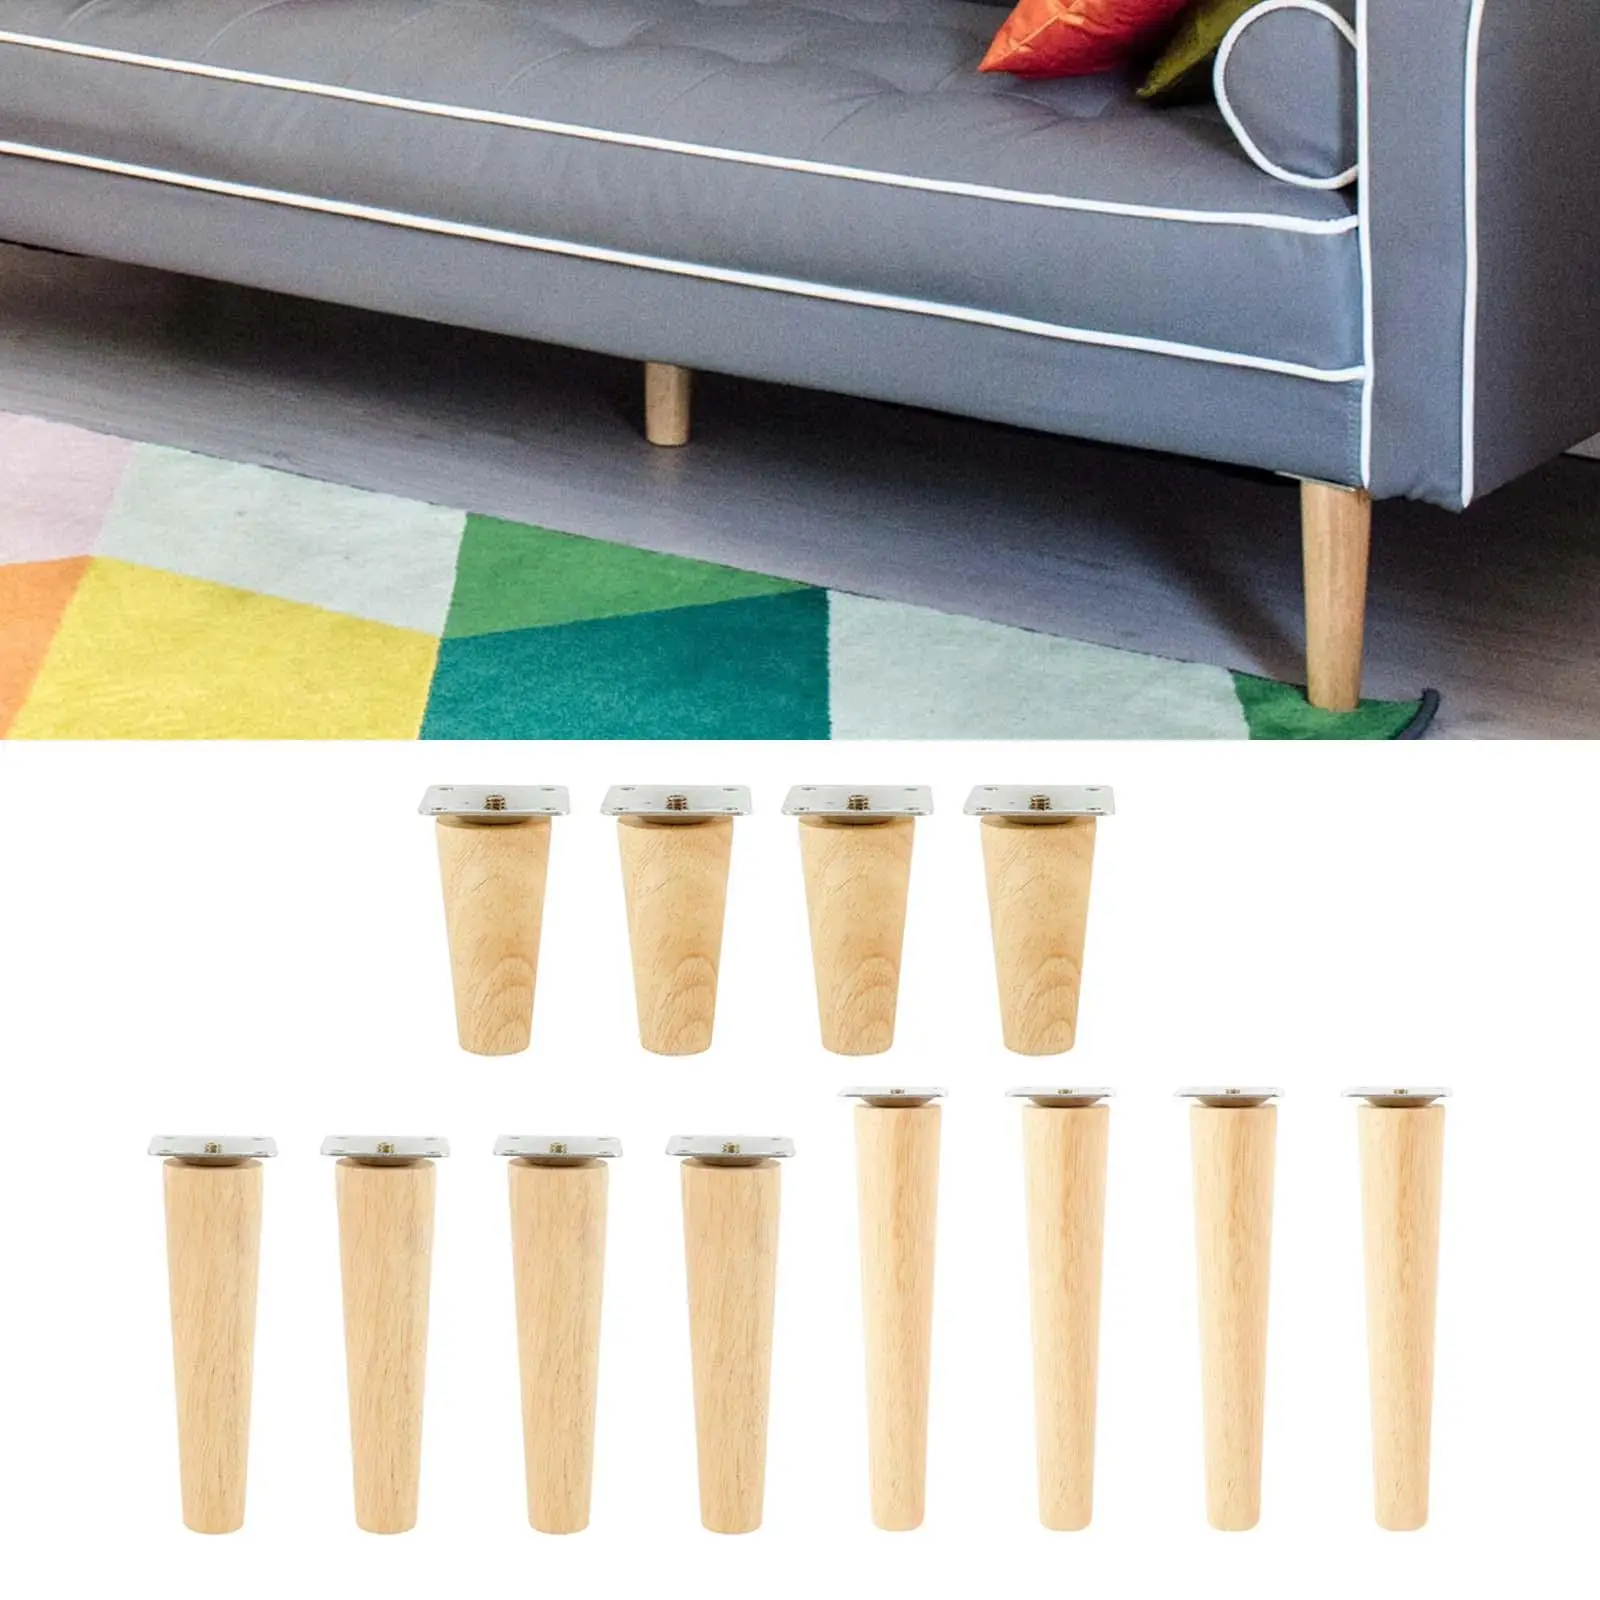 4 Pieces Wooden Furniture Leg Stable Chair Legs Furniture Legs Fashion Sofa Legs DIY for Cupboard Couch Wardrobe Chair Shelves